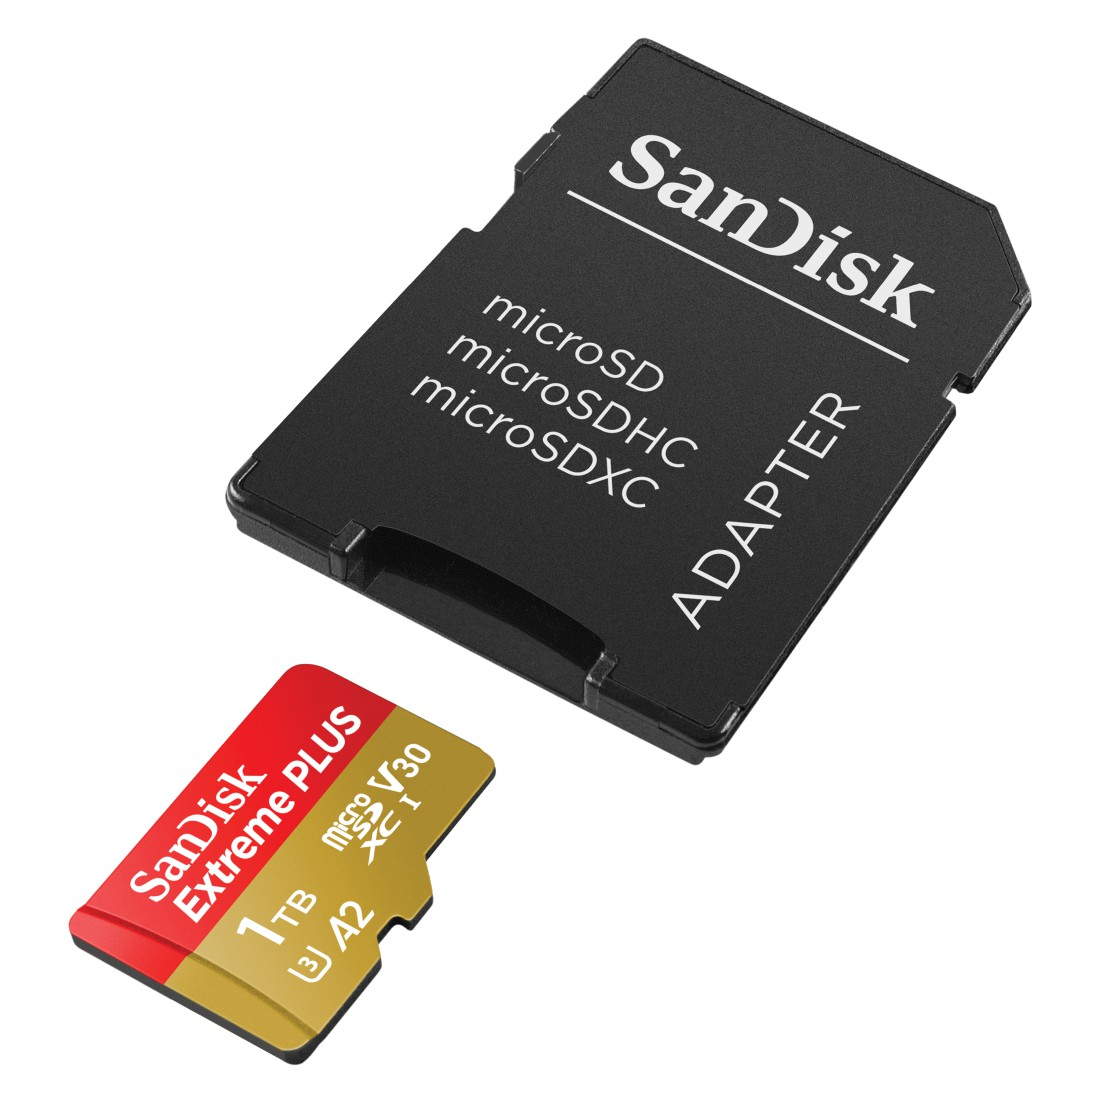 SANDISK Elite Extreme® PLUS TB, 1 Speicherkarte, 200 Micro-SDXC MB/s UHS-I